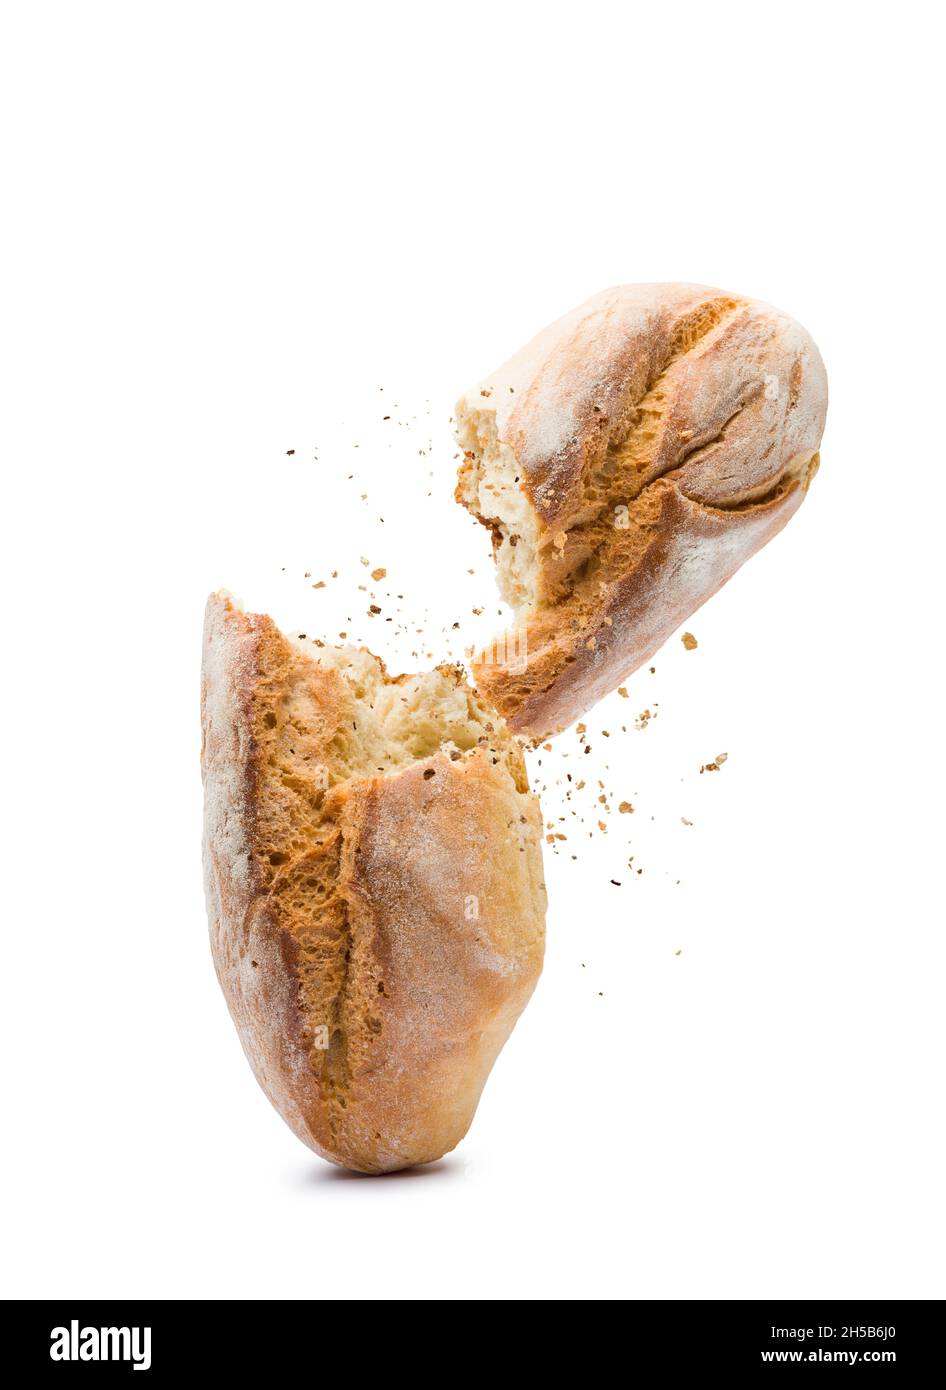 Fresh crunchy baked bread opened on white background. Stock Photo